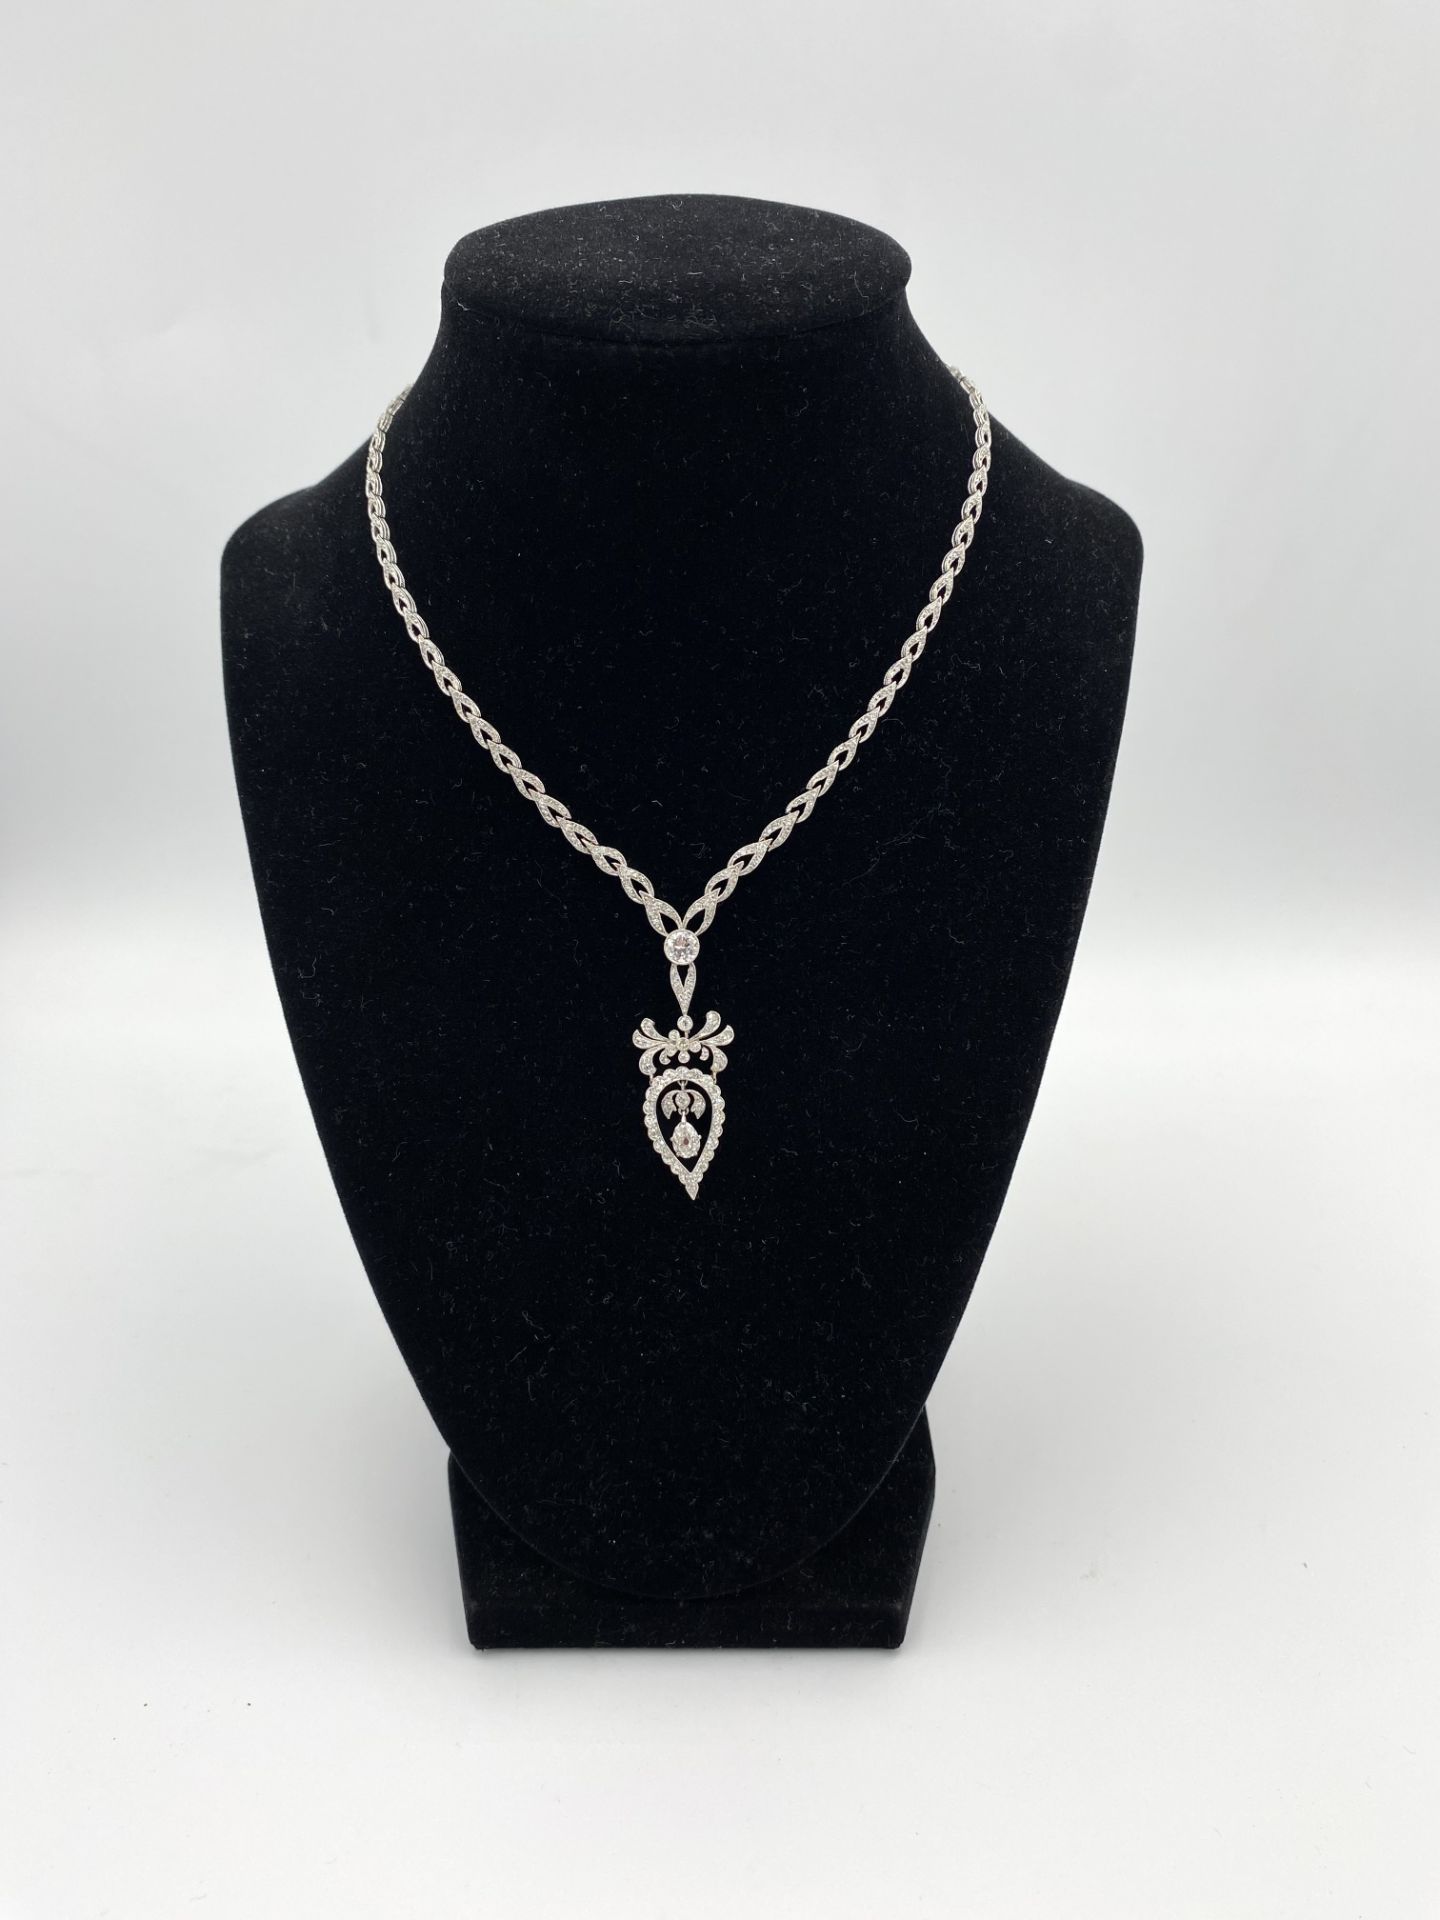 Edwardian white gold and diamond necklace